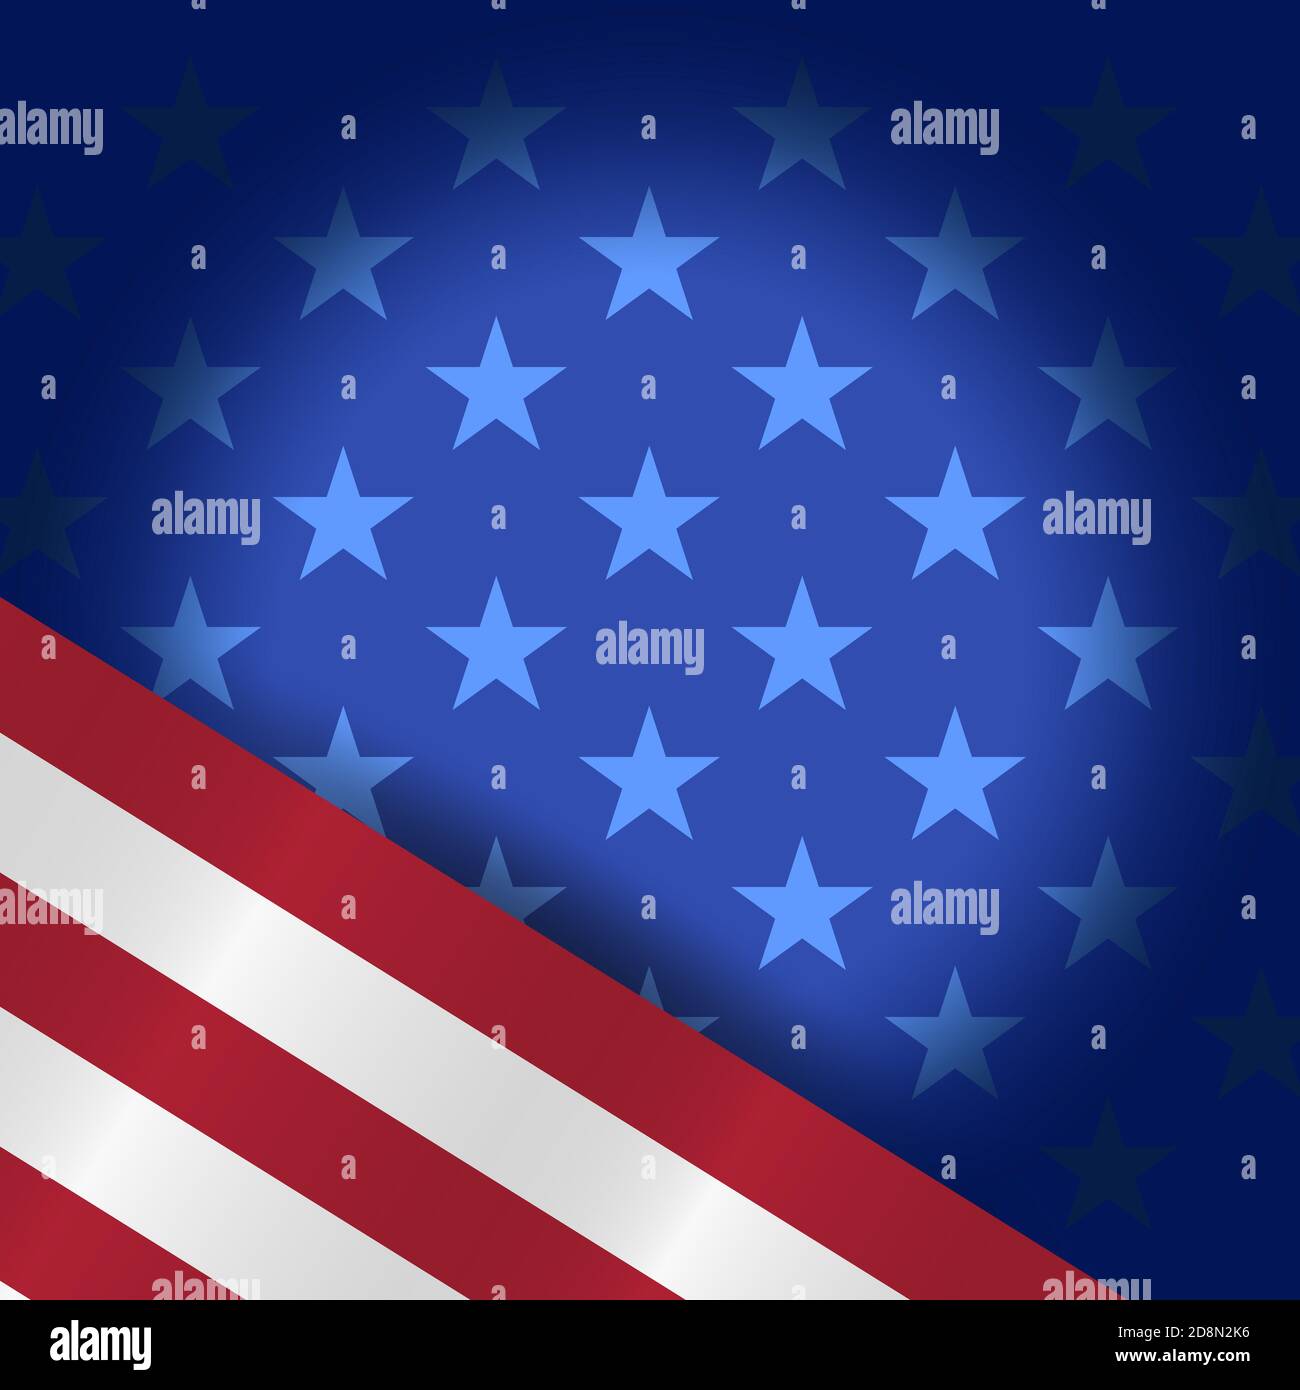 2020 United States presidential election background. illustration. Stock Photo